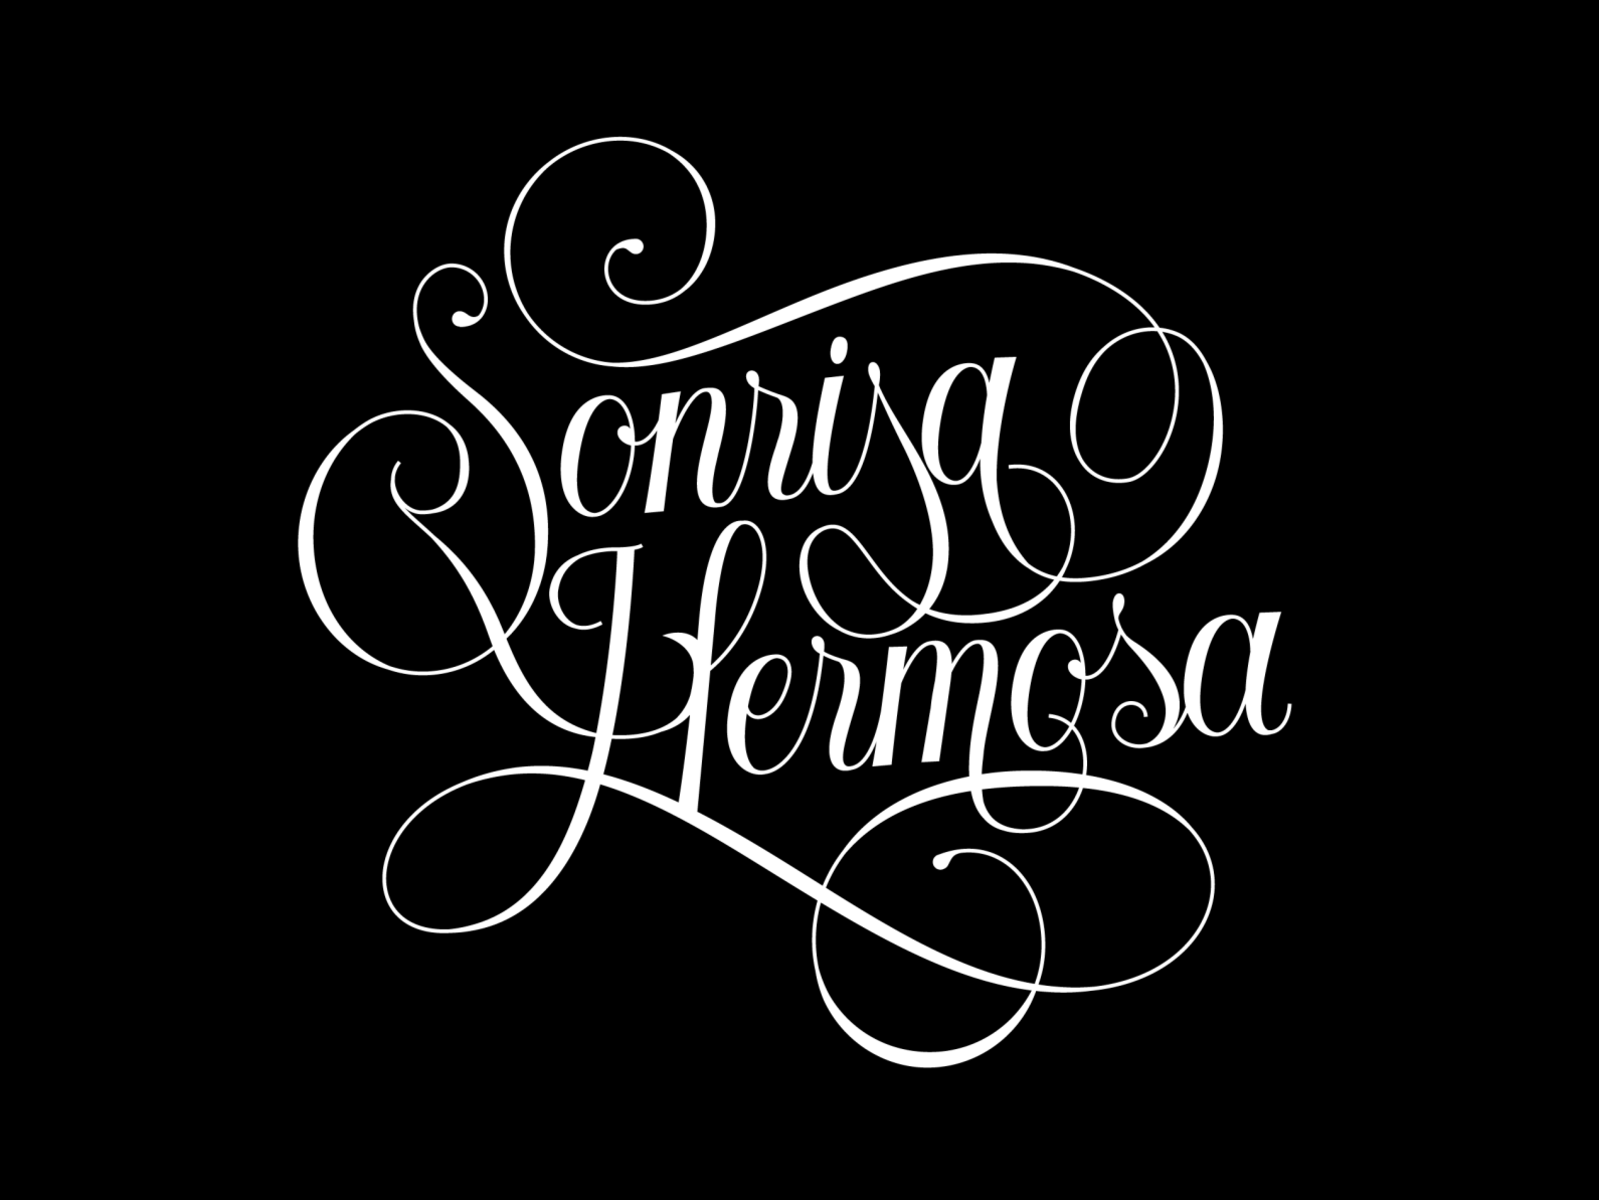 Sonrisa Hermosa - Lettering by Bryam Cavero on Dribbble